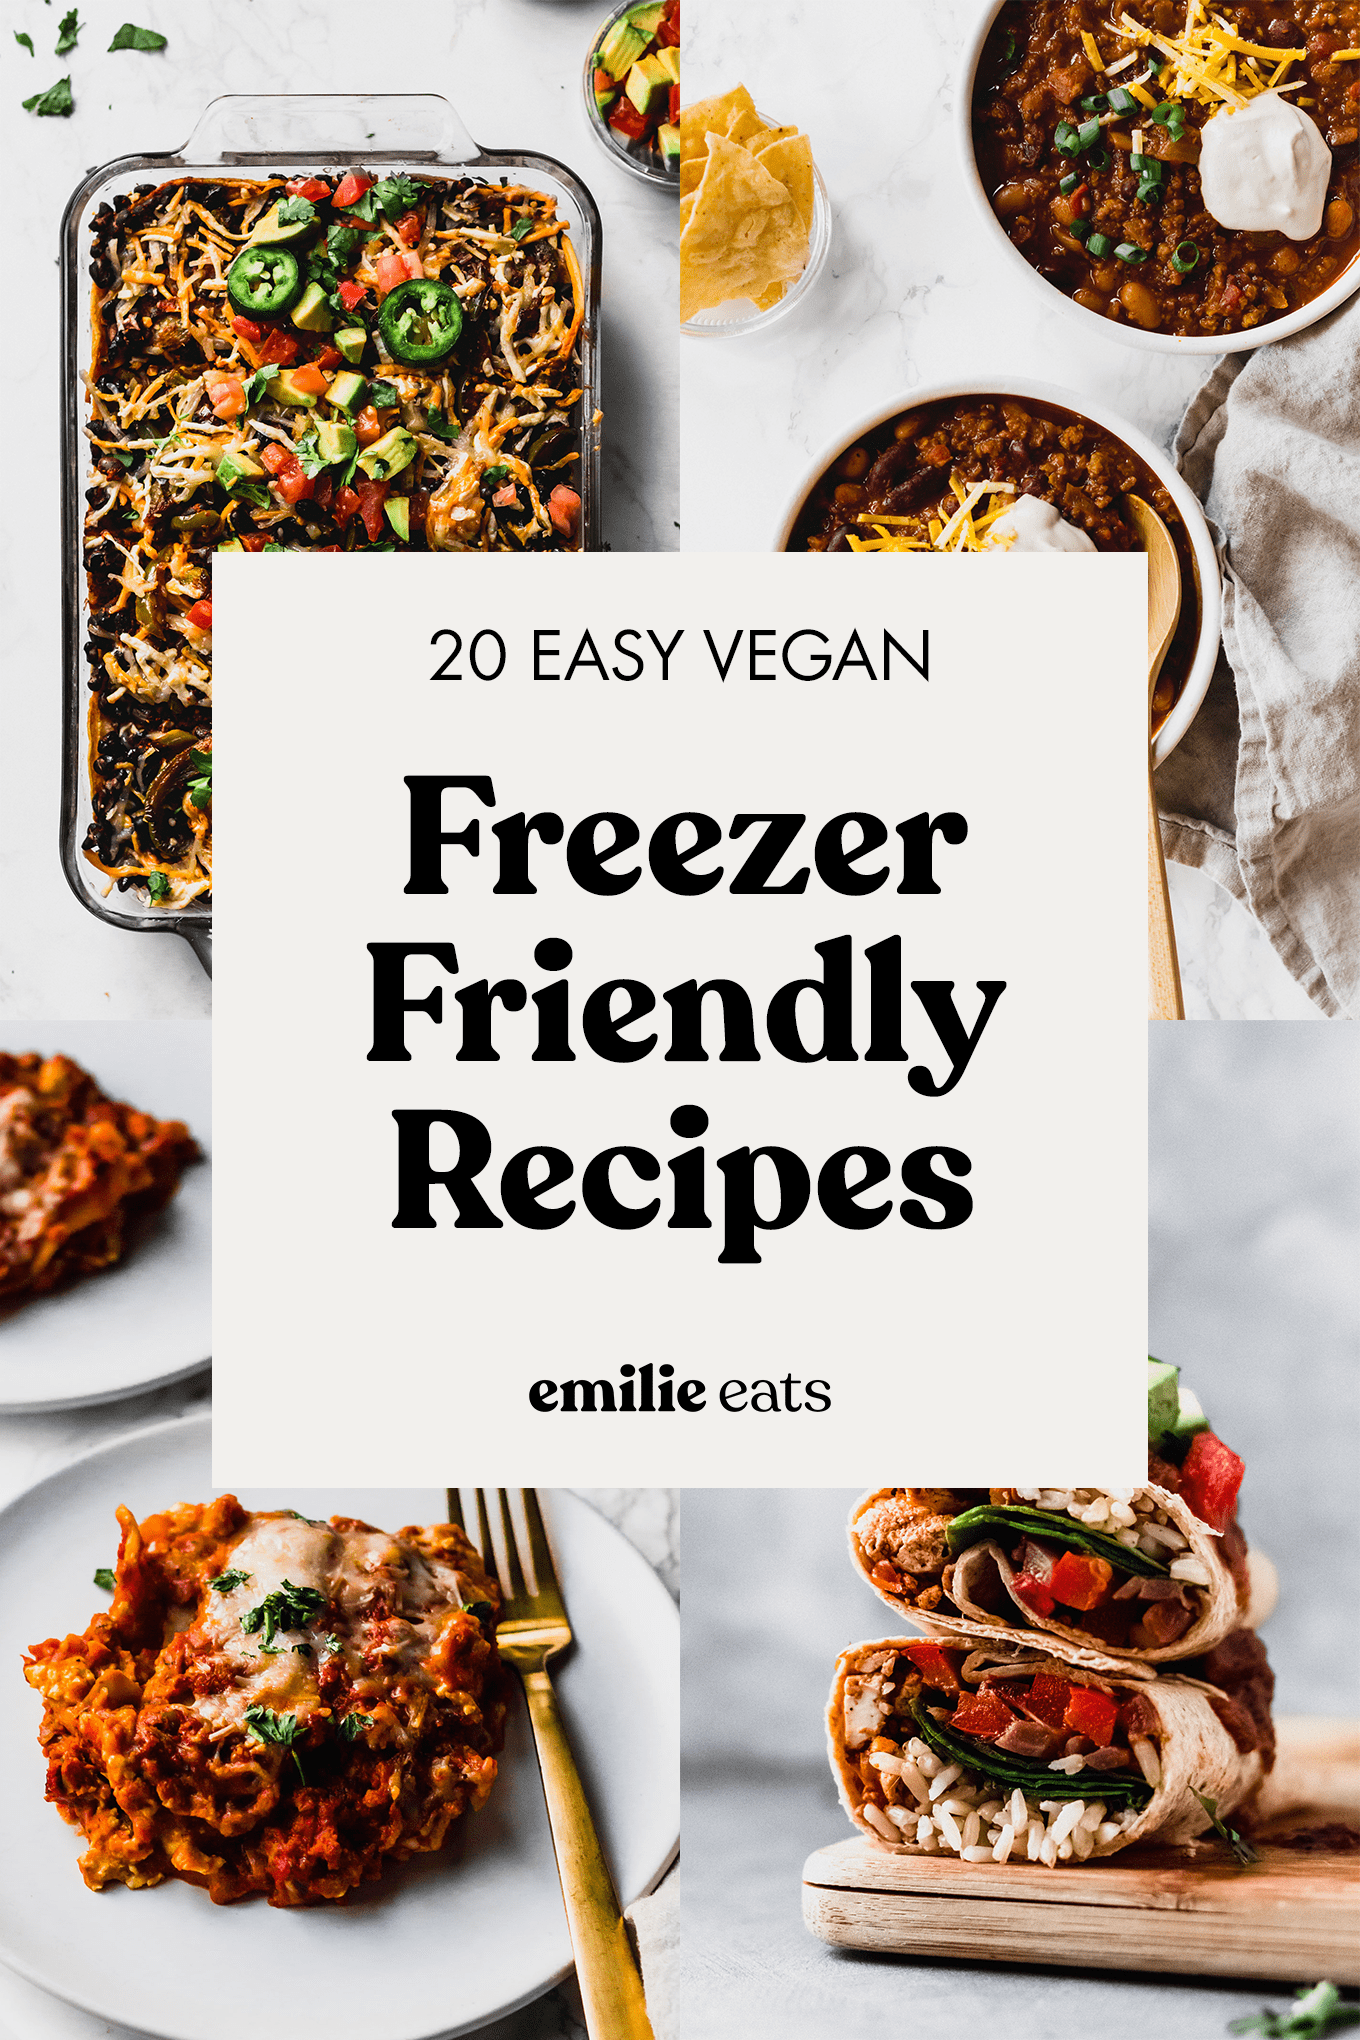 https://www.emilieeats.com/wp-content/uploads/2019/09/20-vegan-freezer-friendly-meal-prep-recipes-hero.png